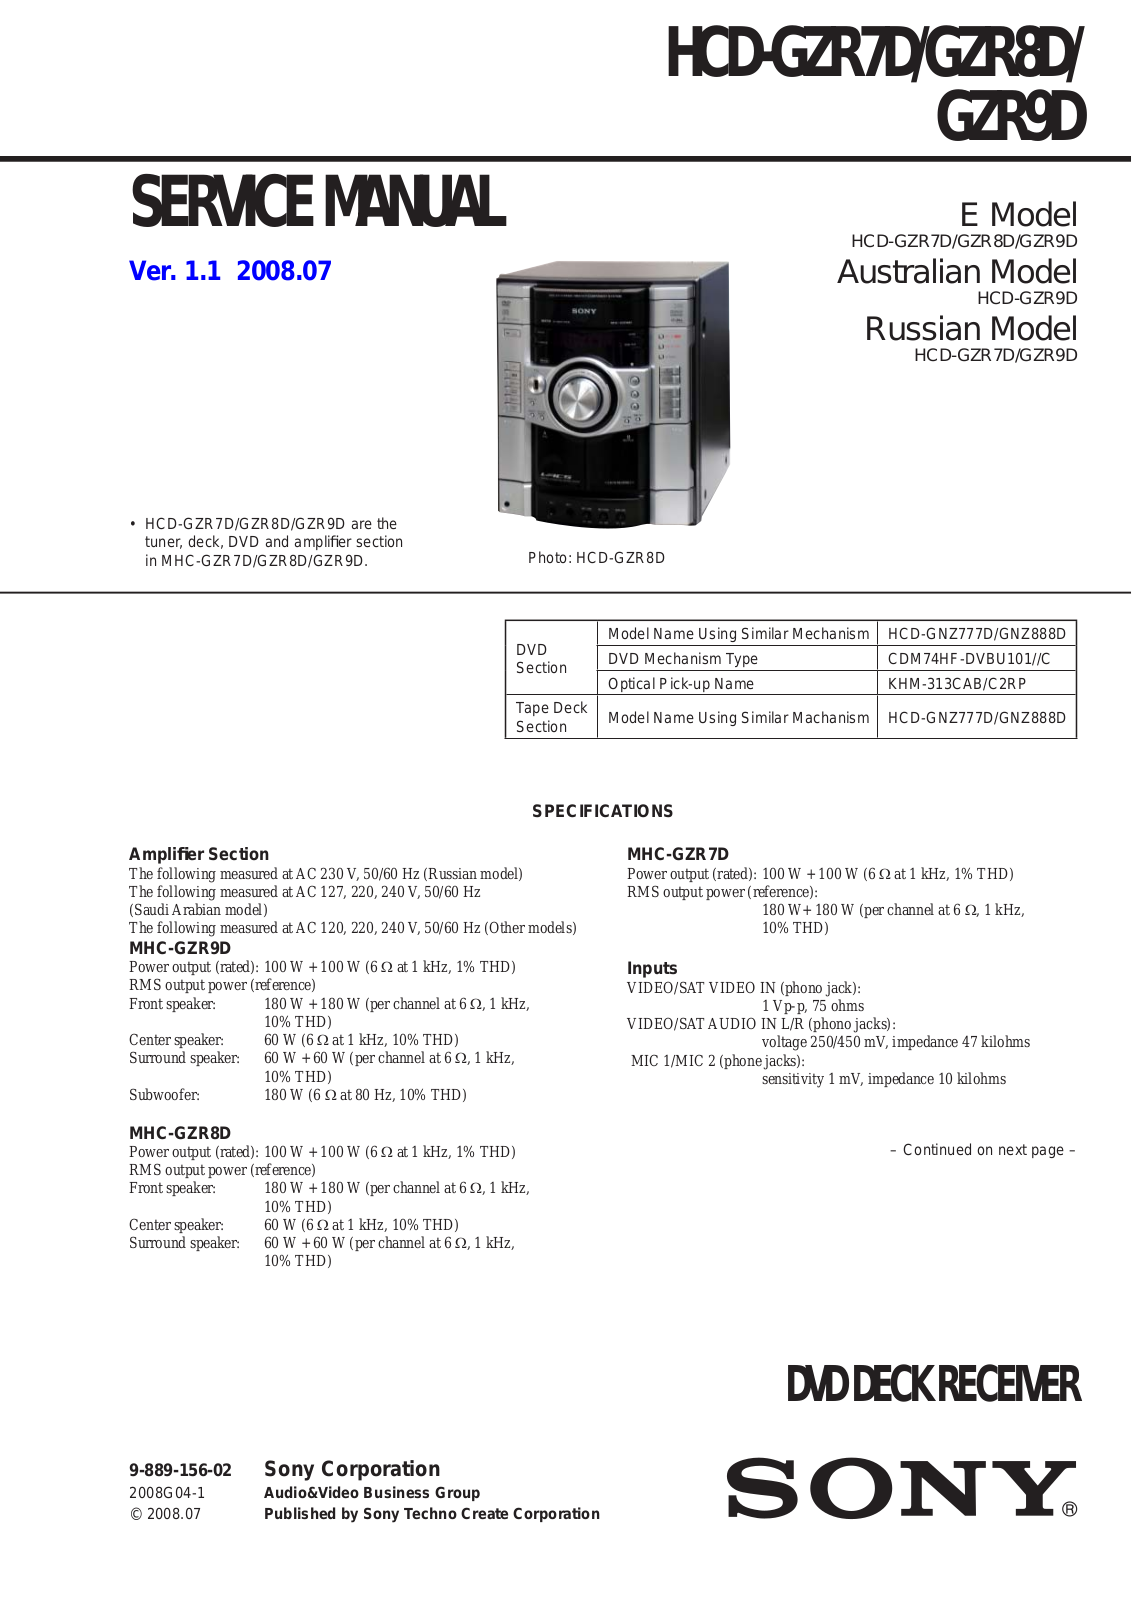 Sony HCDGZR-7-D, HCDGZR-8-D, HCDGZR-9-D Service manual